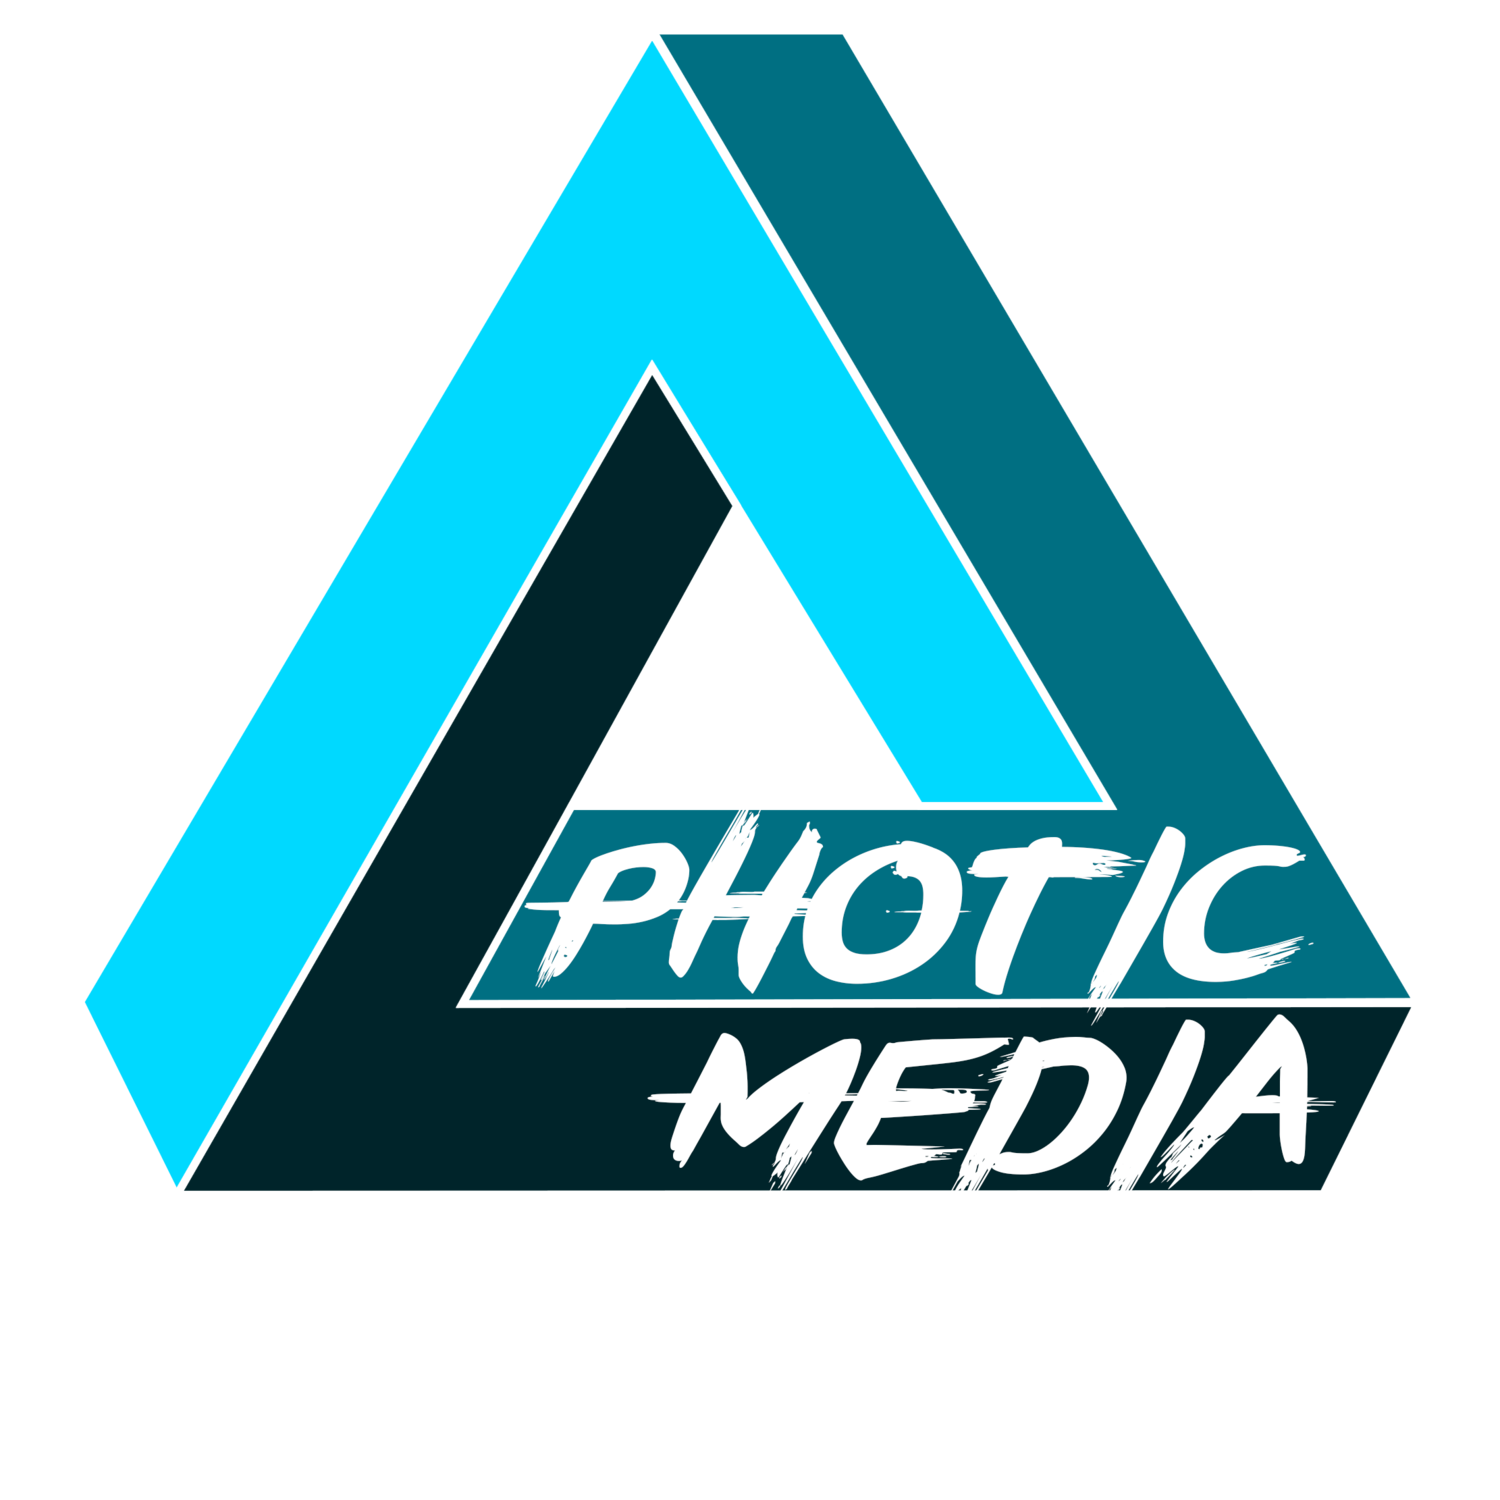 PhoticMedia